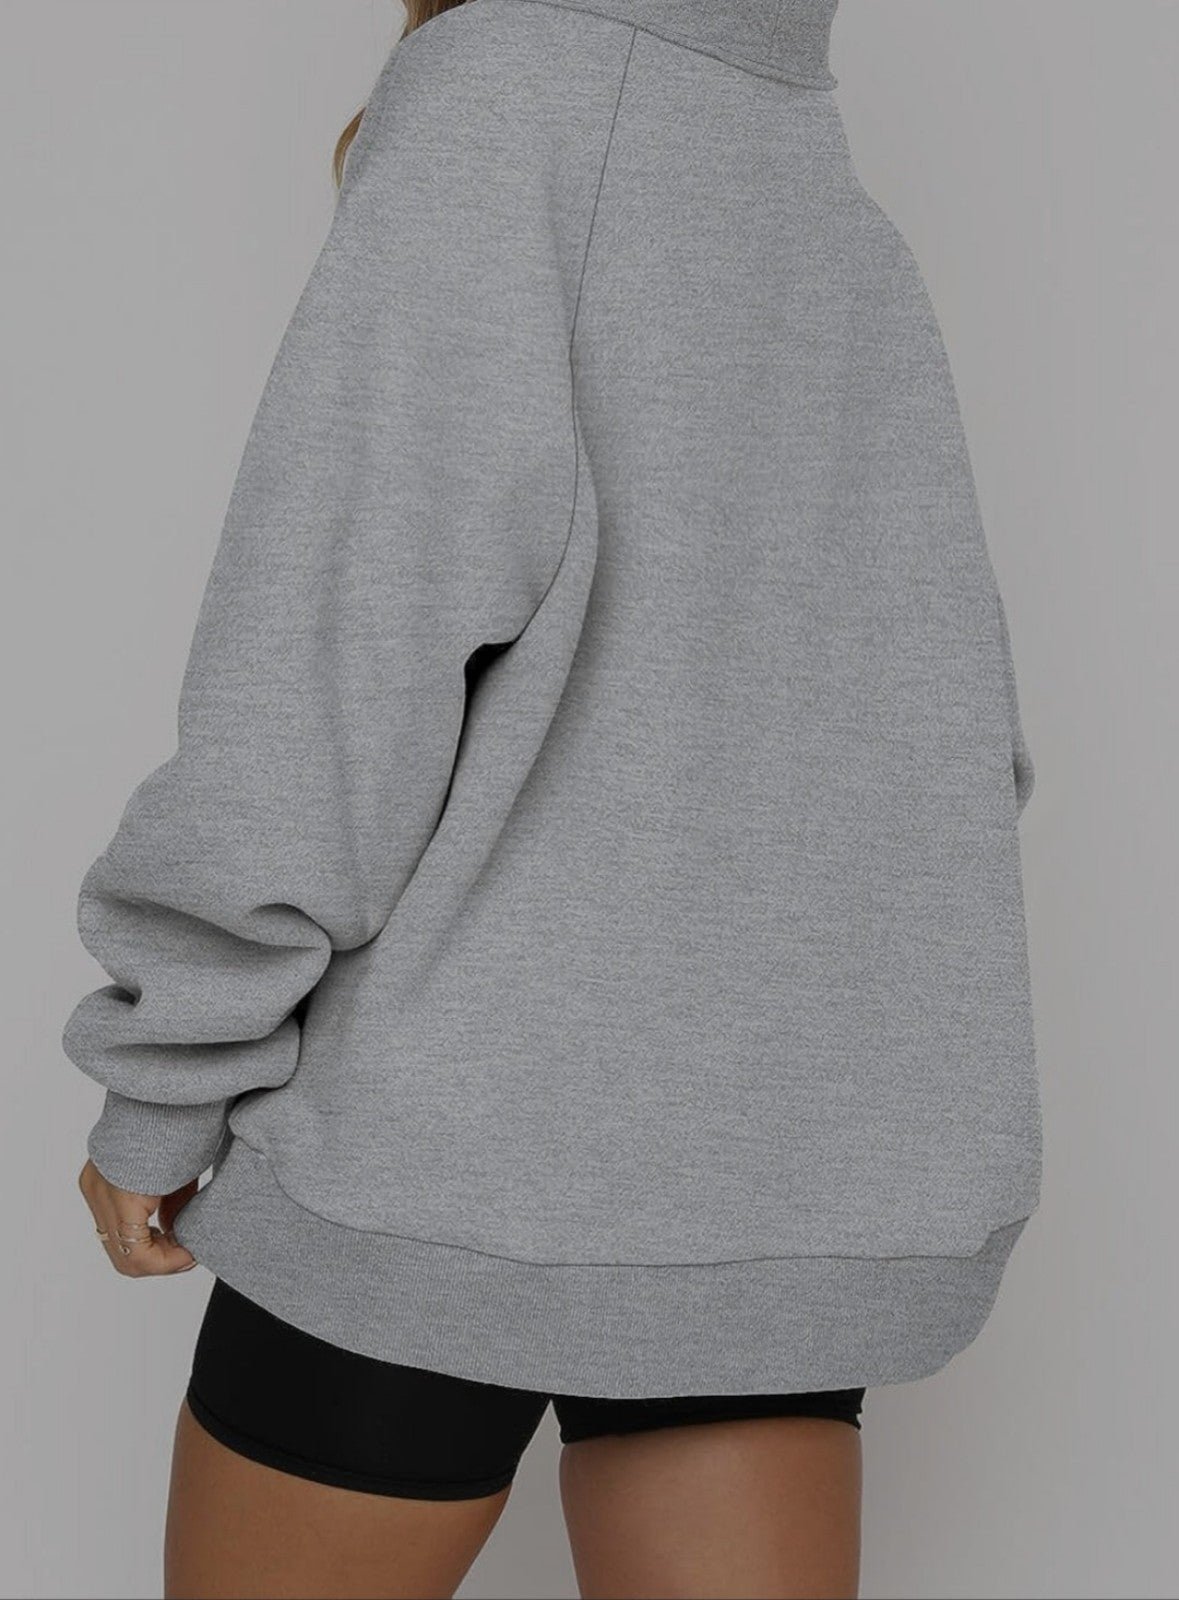 Stylish SMALL Womens Half Zip Oversized Sweatshirts Casual Quarter Zipper Hoodies oSdffQO6S Online Shop